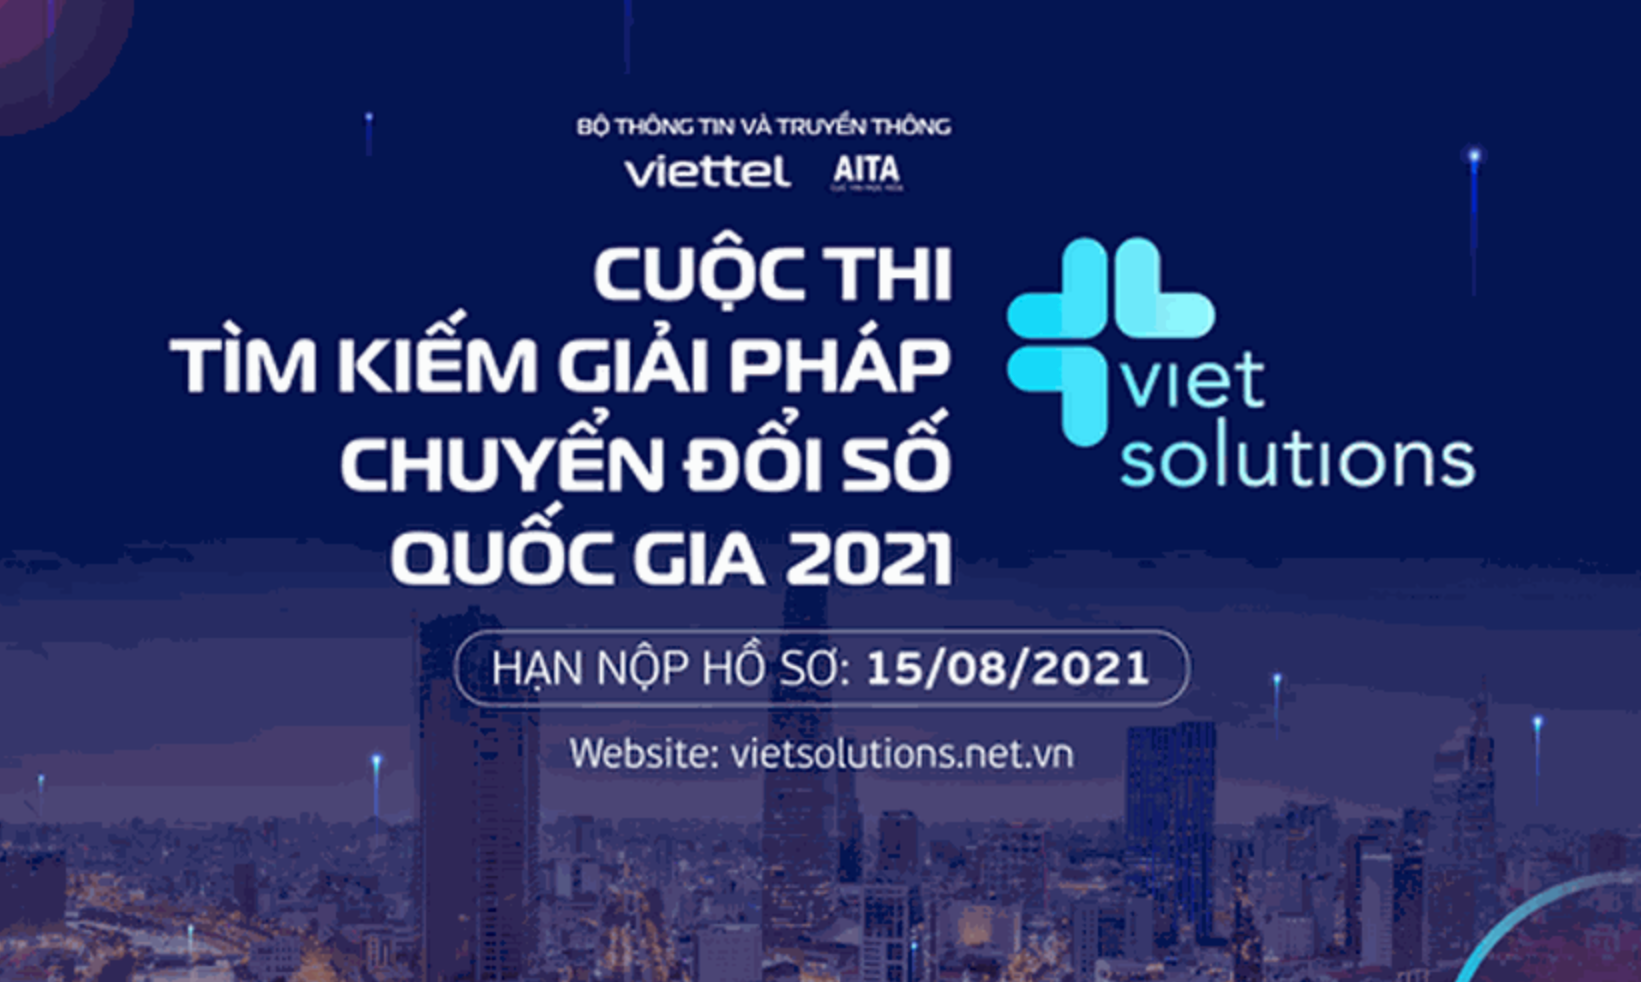 Viet Solutions 2021 kicked off